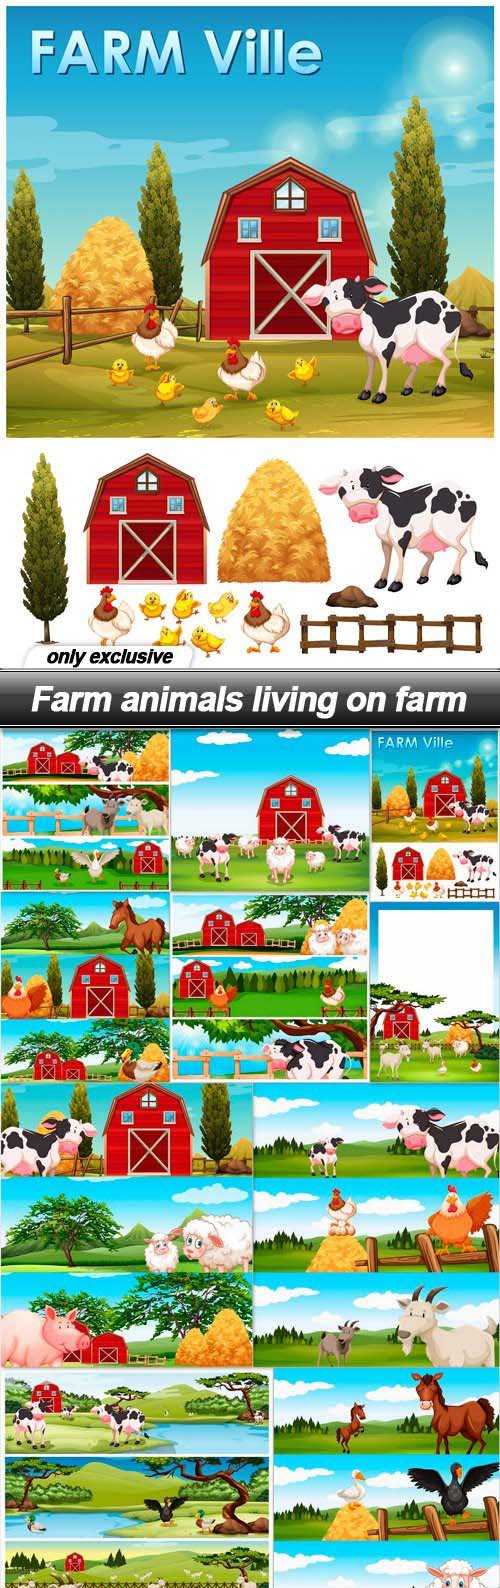 Farm animals living on farm